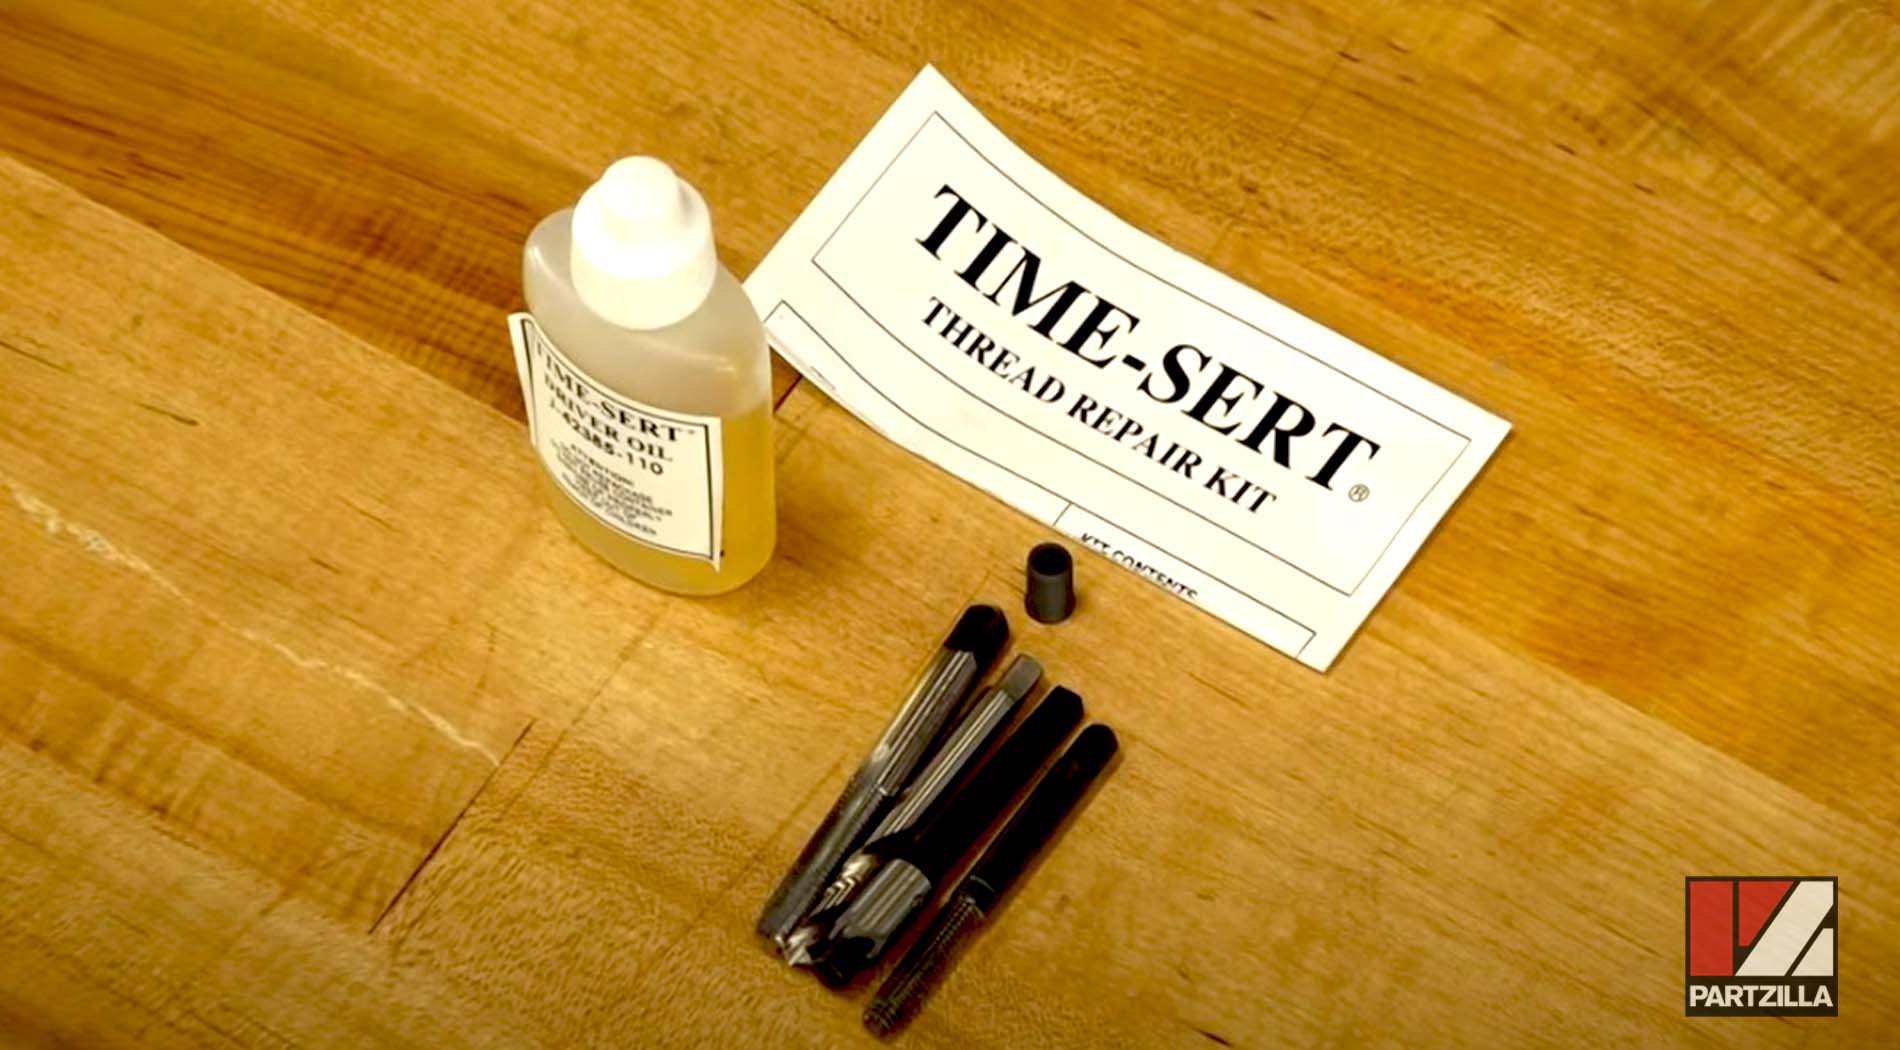 Time Sert thread repair kit